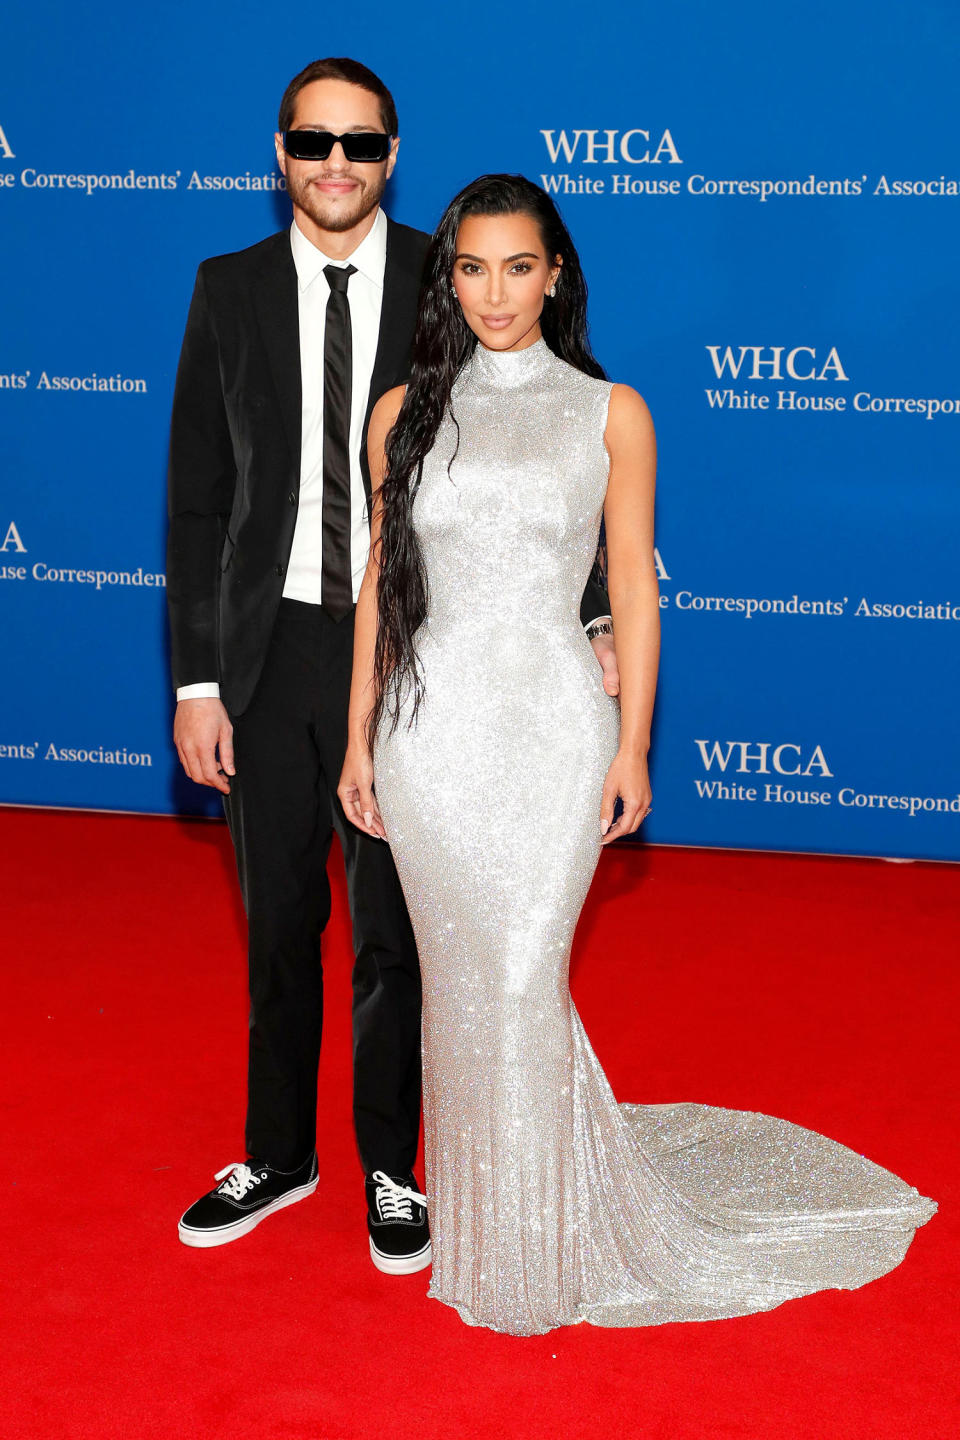 Pete Davidson and Kim Kardashian attend the 2022 White House Correspondents' Association Dinner at Washington Hilton on April 30, 2022 in Washington, DC. (Paul Morigi / Getty Images)